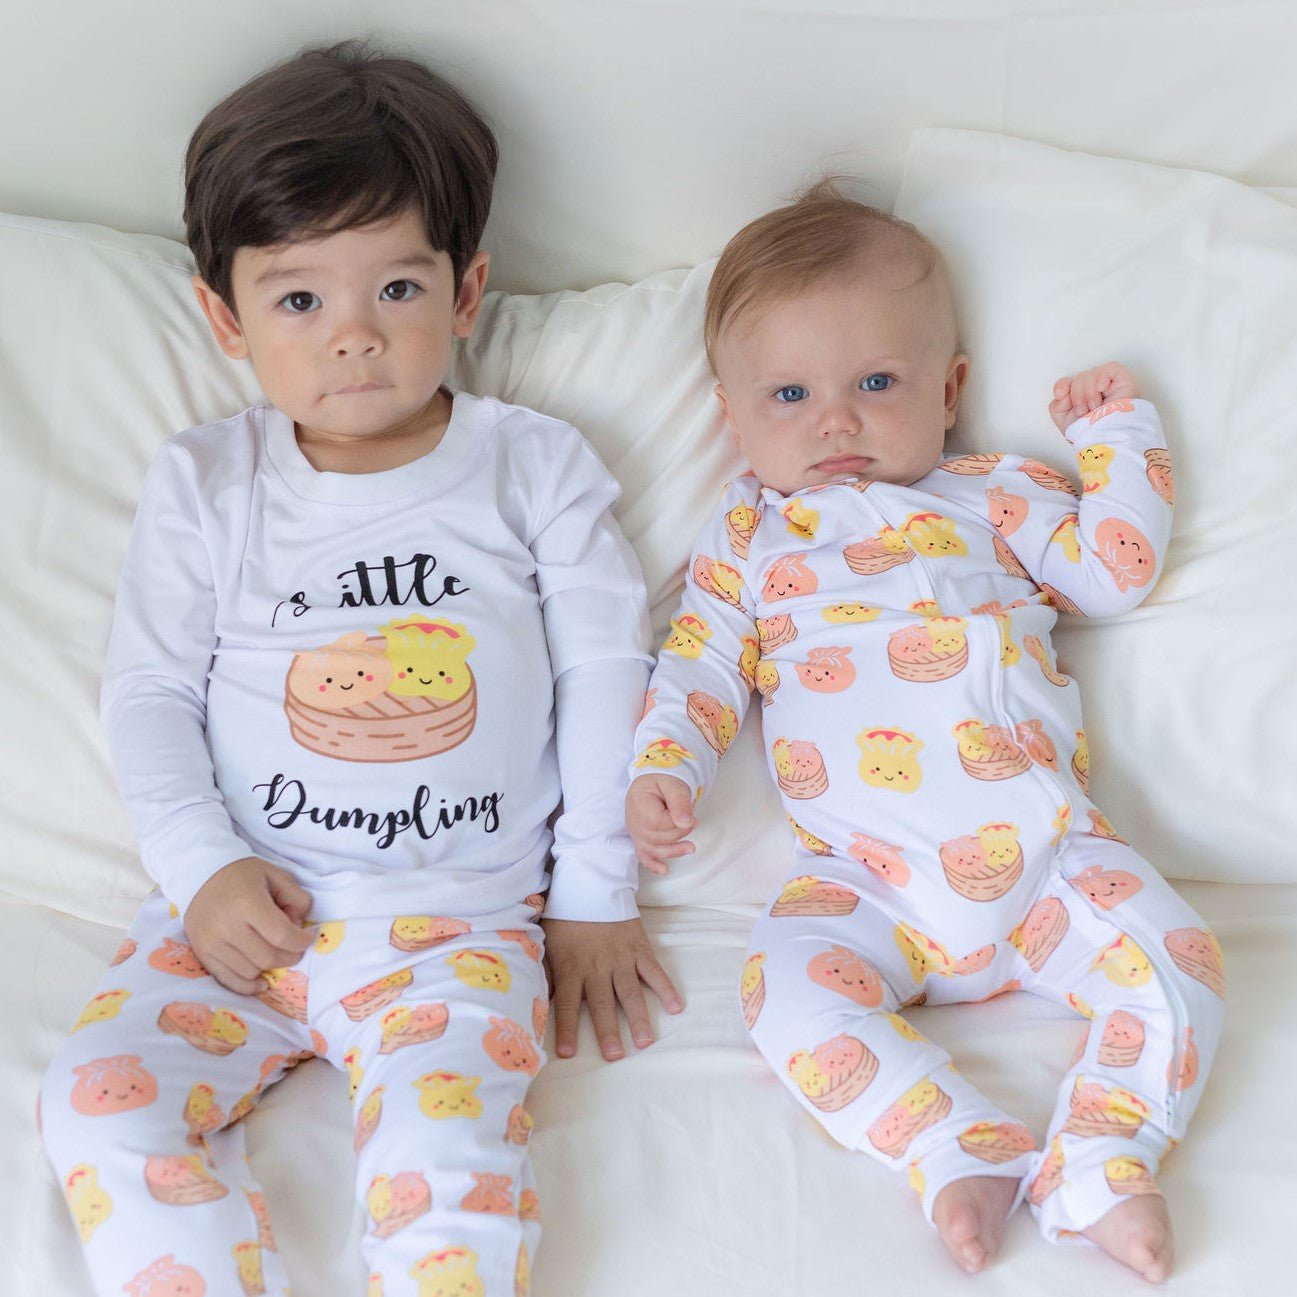 pistol midnat svinge Kids Pajamas | Sleepwear for Toddlers - The Wee Bean